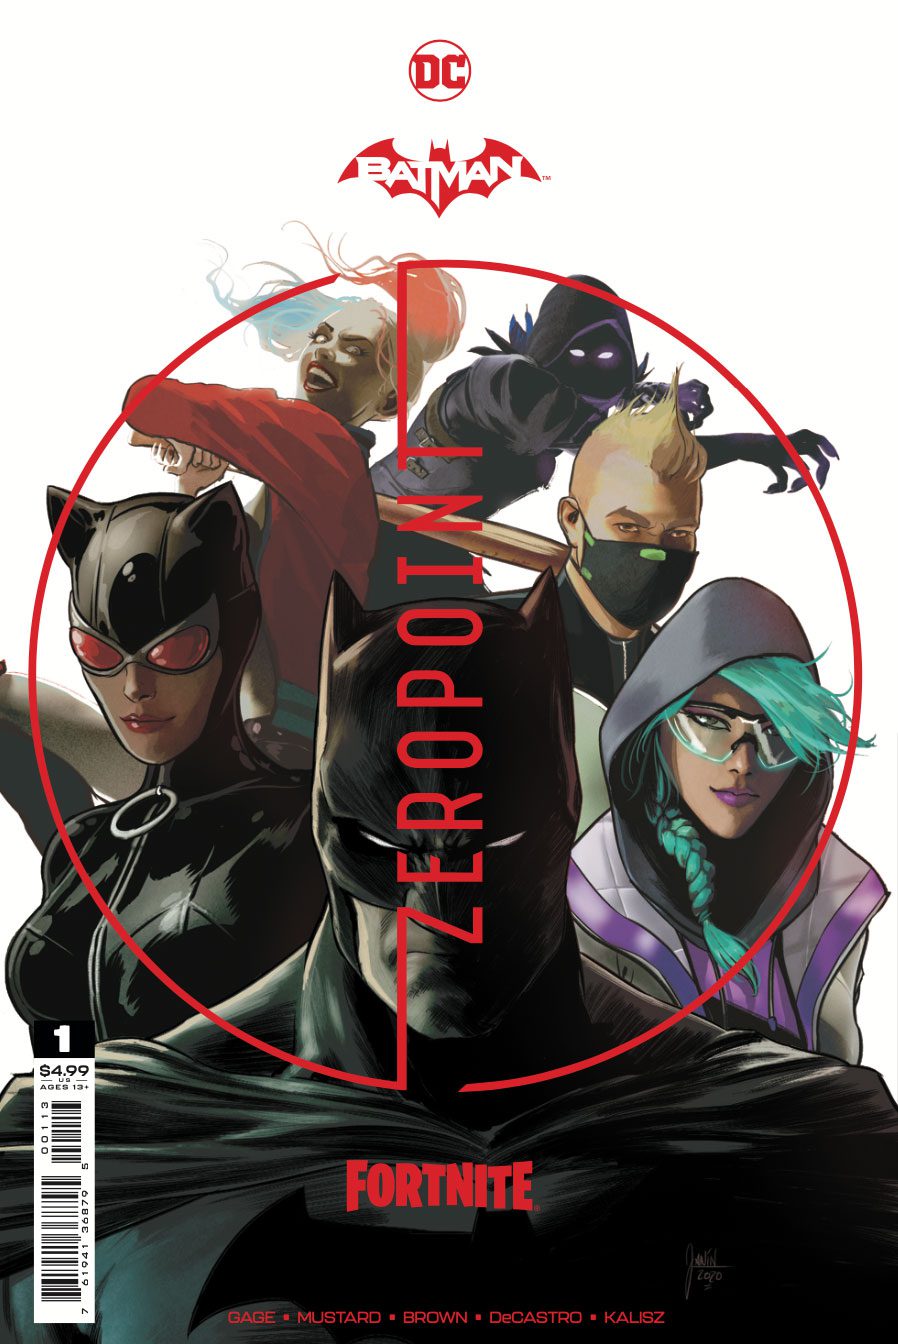 BATMAN FORTNITE ZERO POINT #1 (third printing)